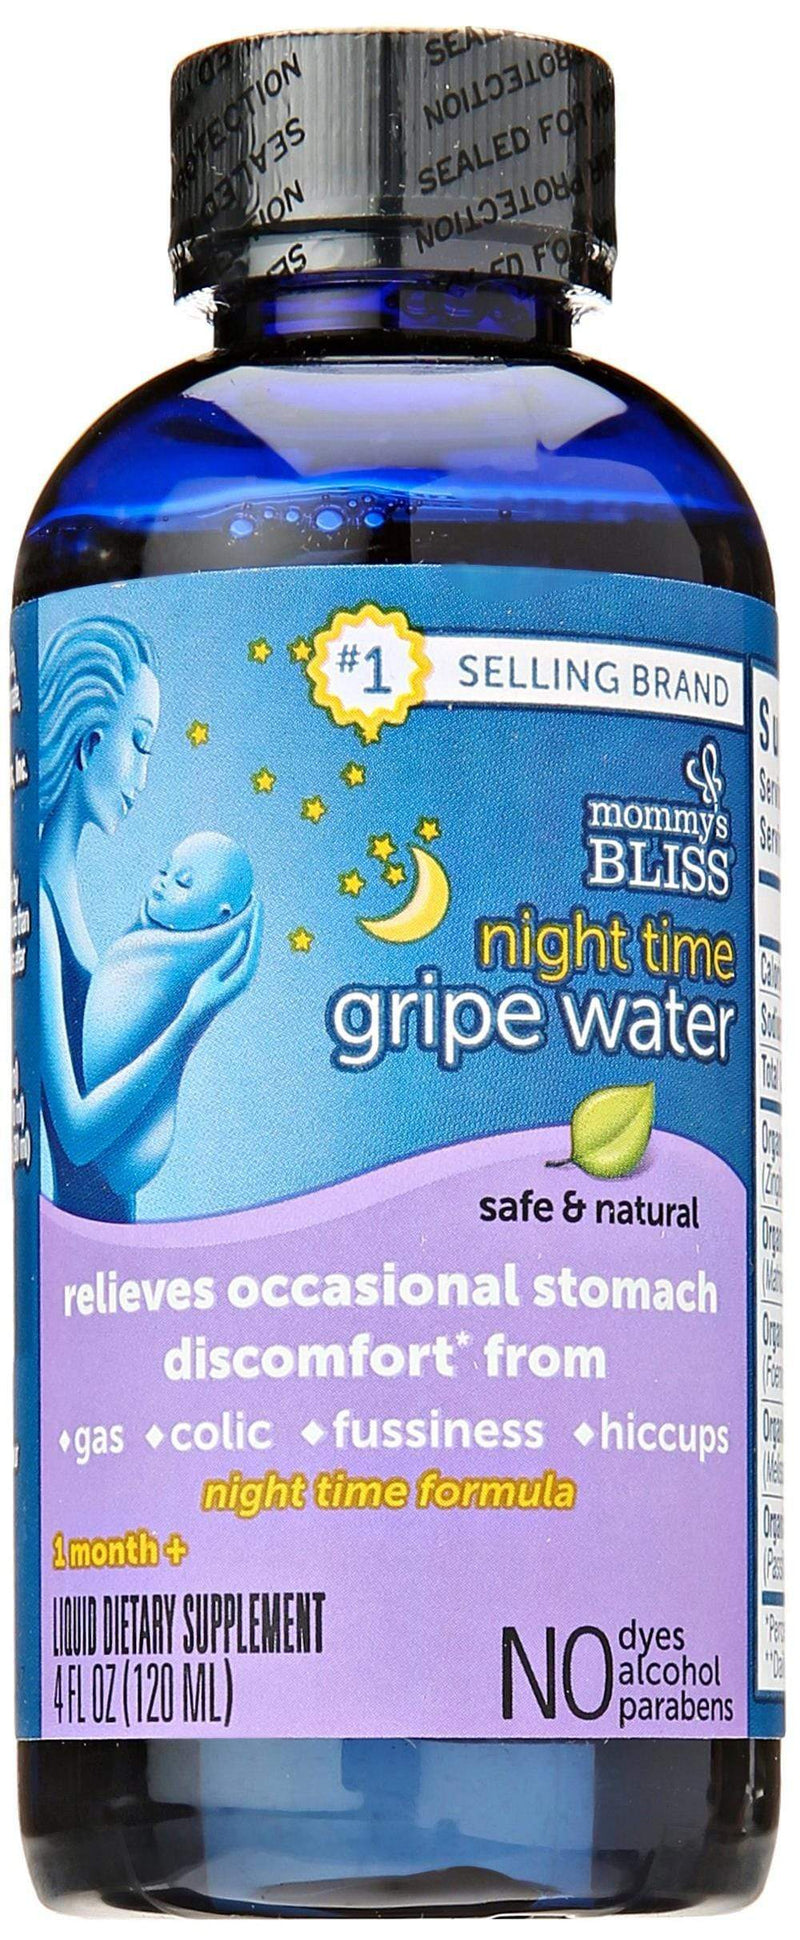 Mommy's Bliss Gripe Water Night Time -- 4 fl oz